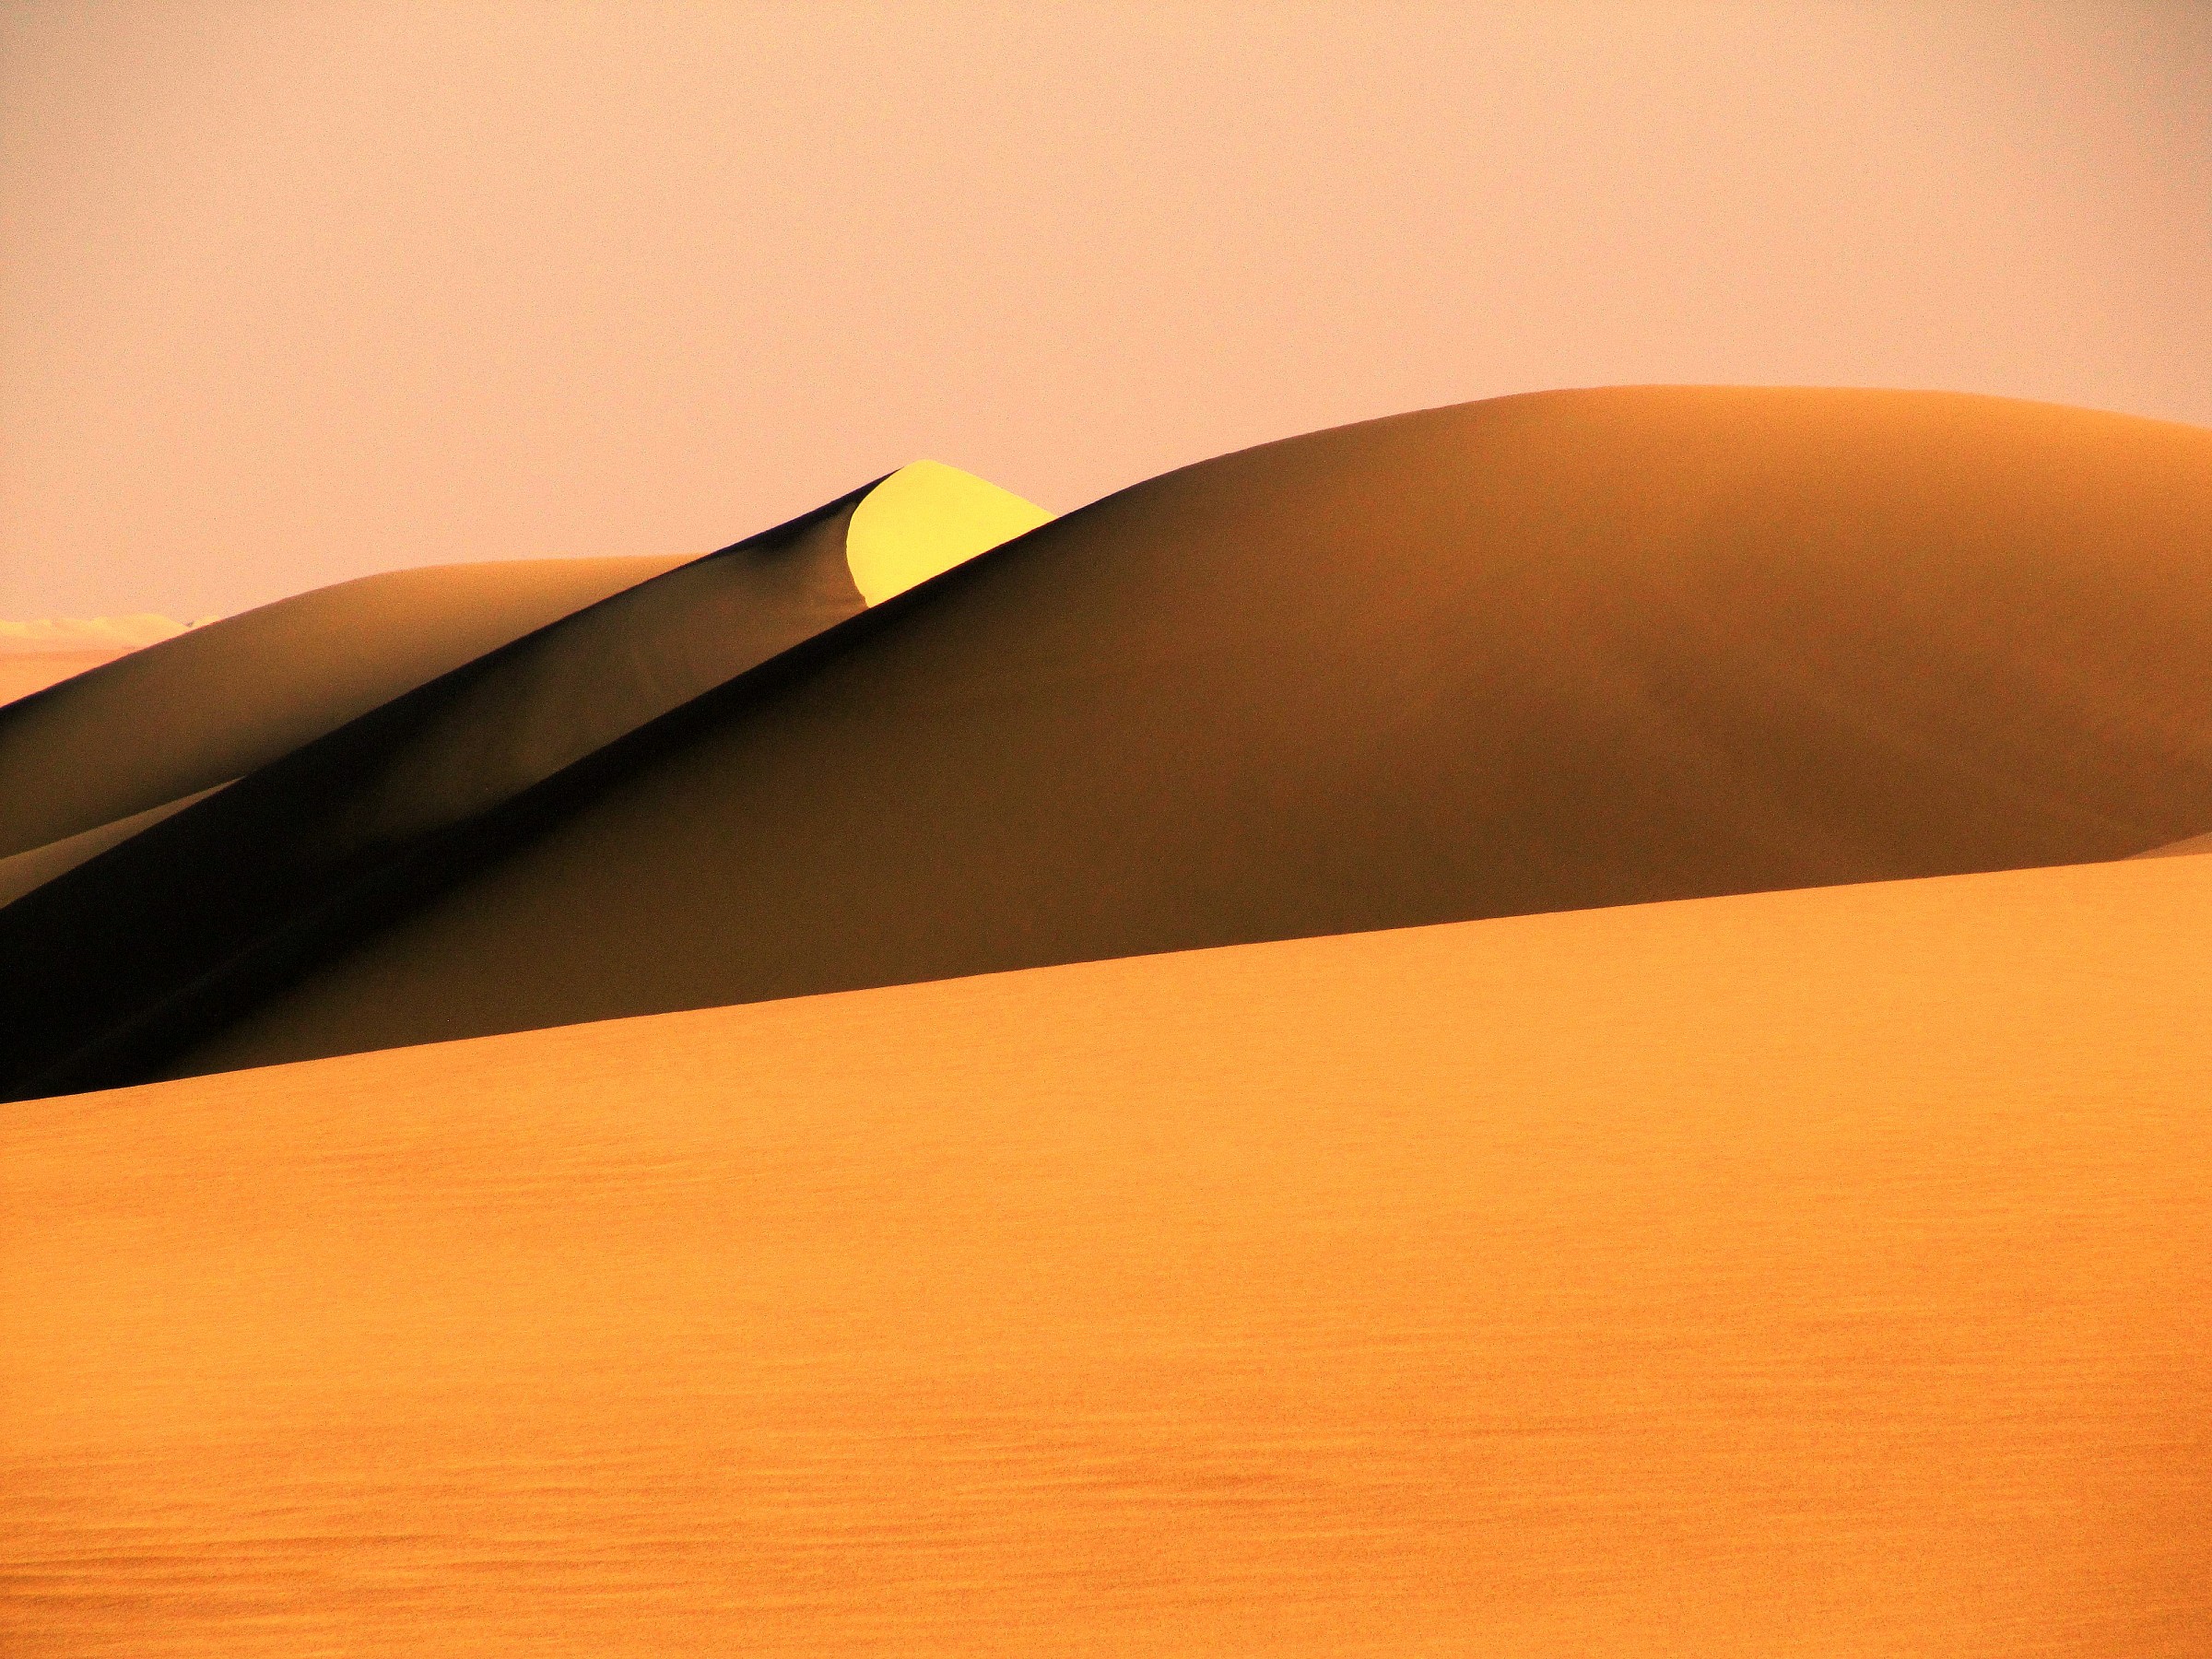 egypt - Sahara desert - the Great Sand Sea...